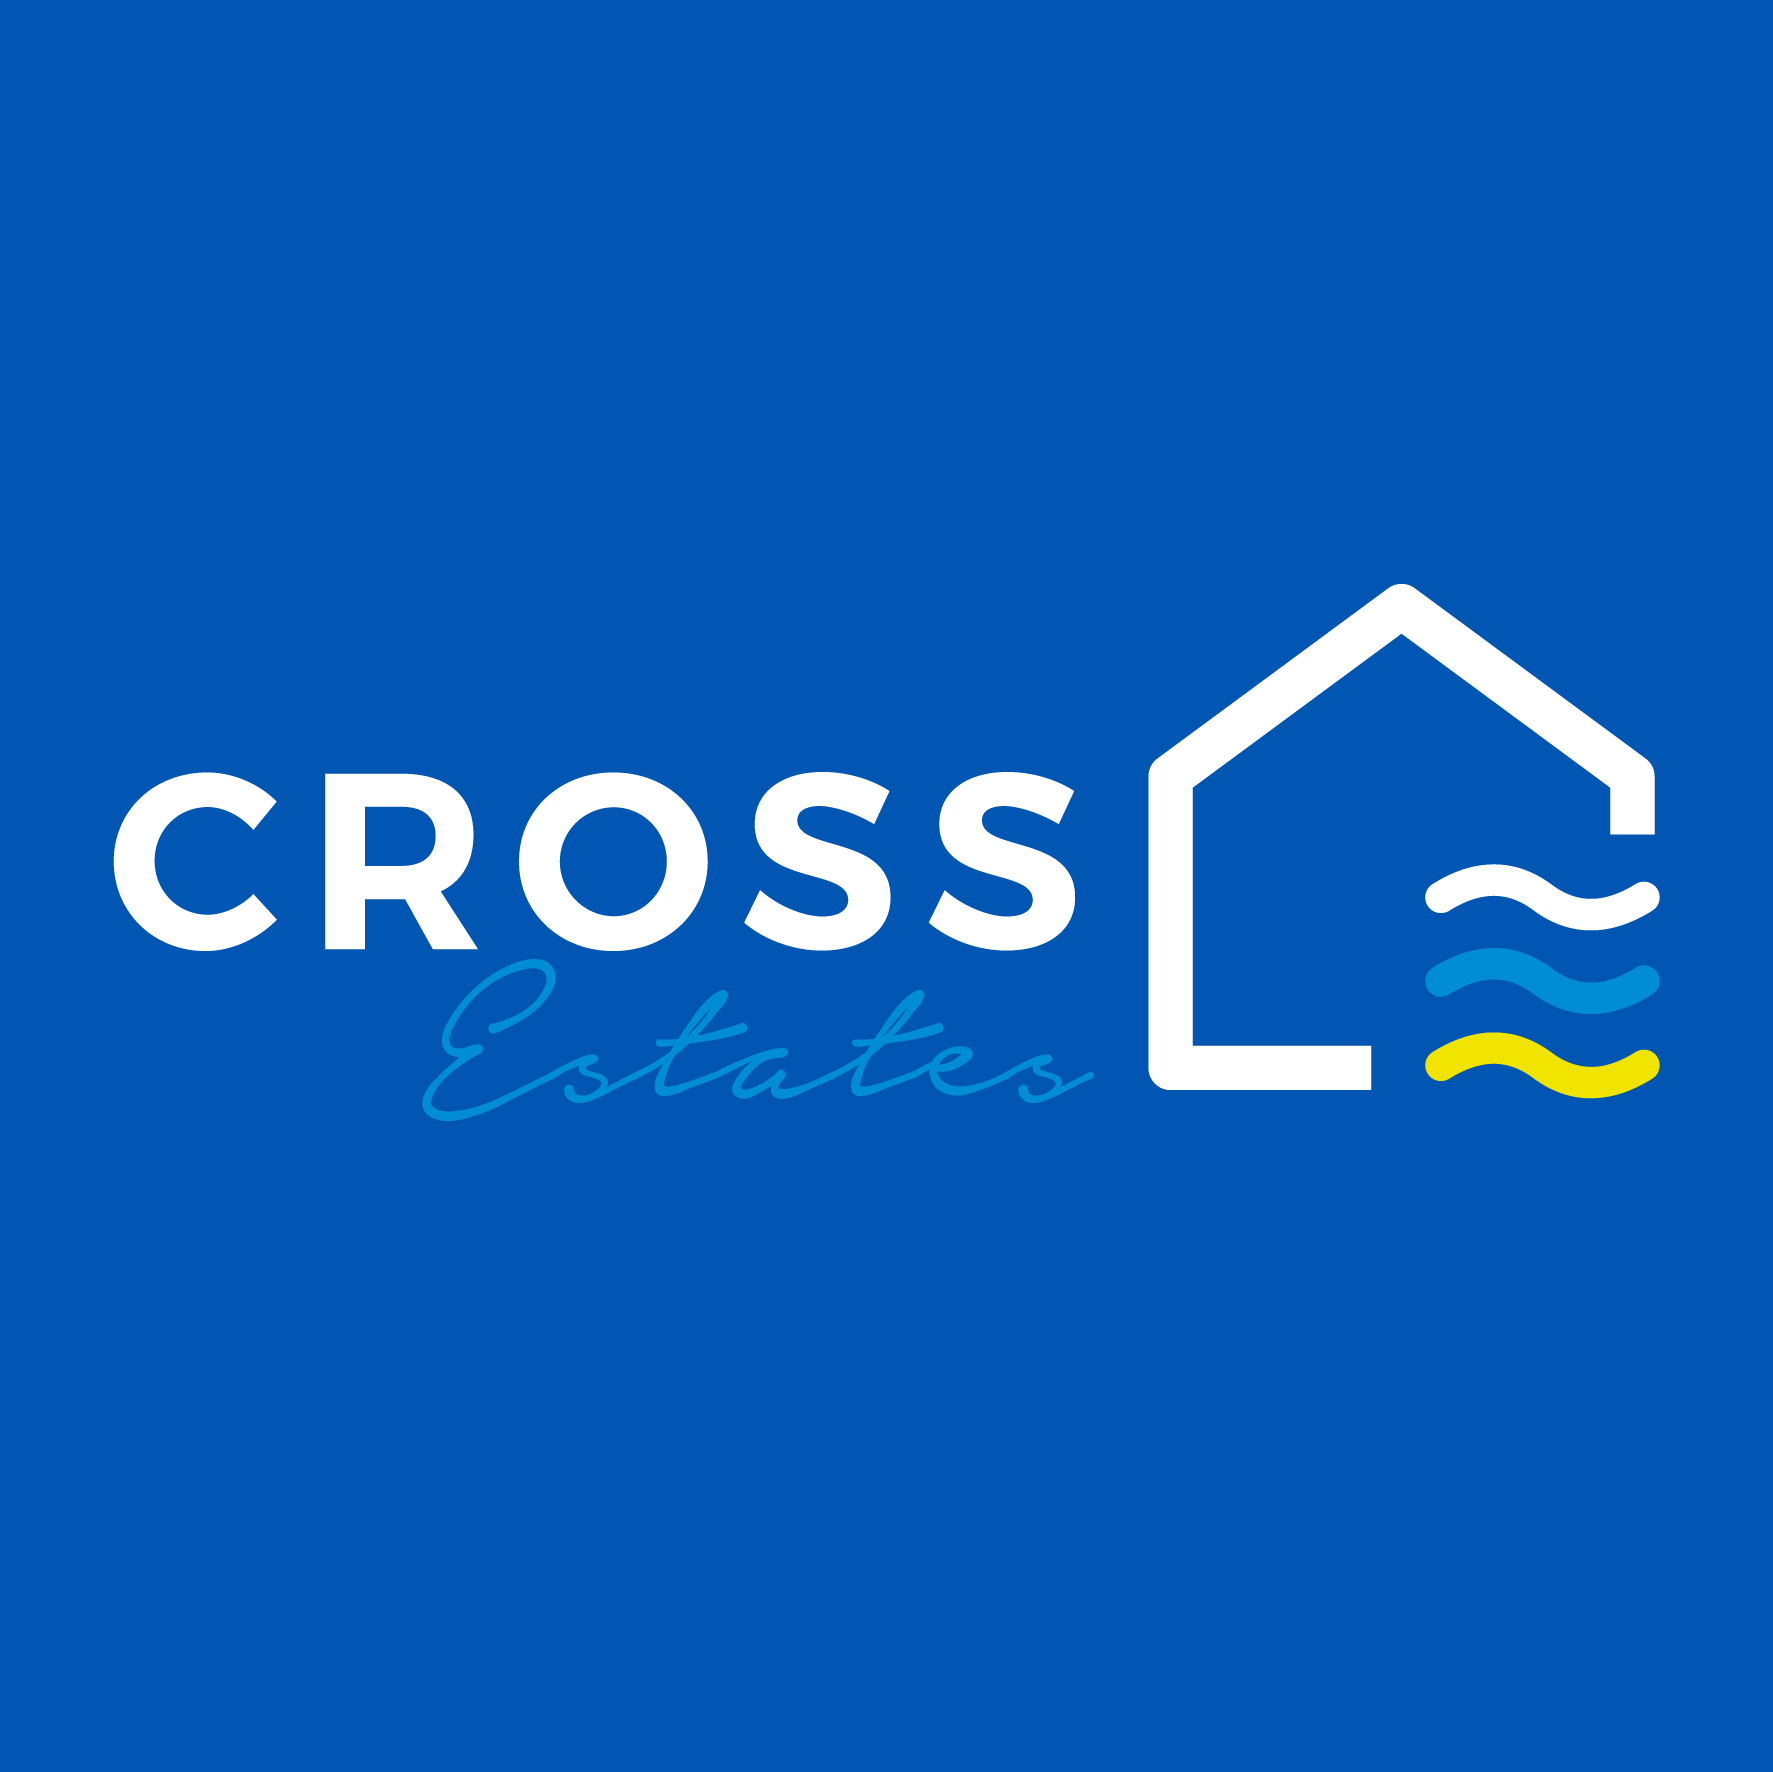 Cross Estates